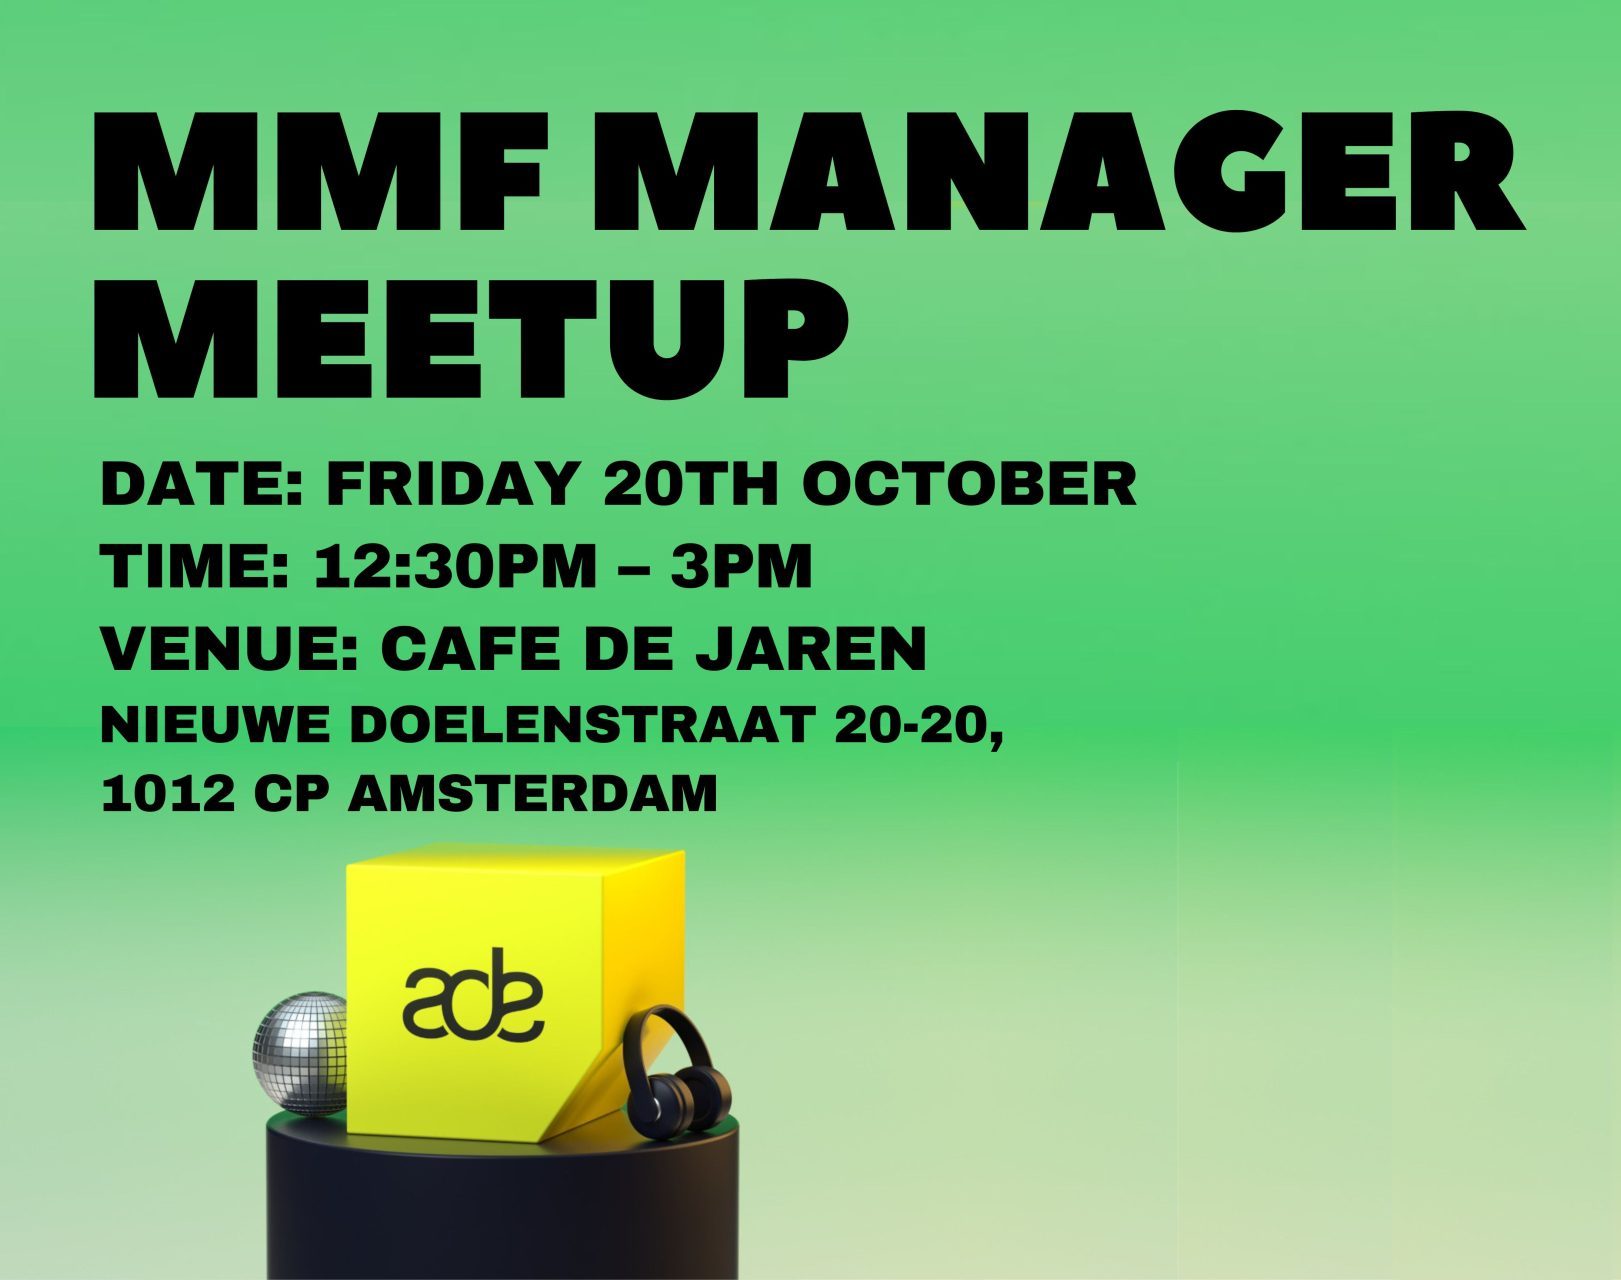 MMF Manager Meetup